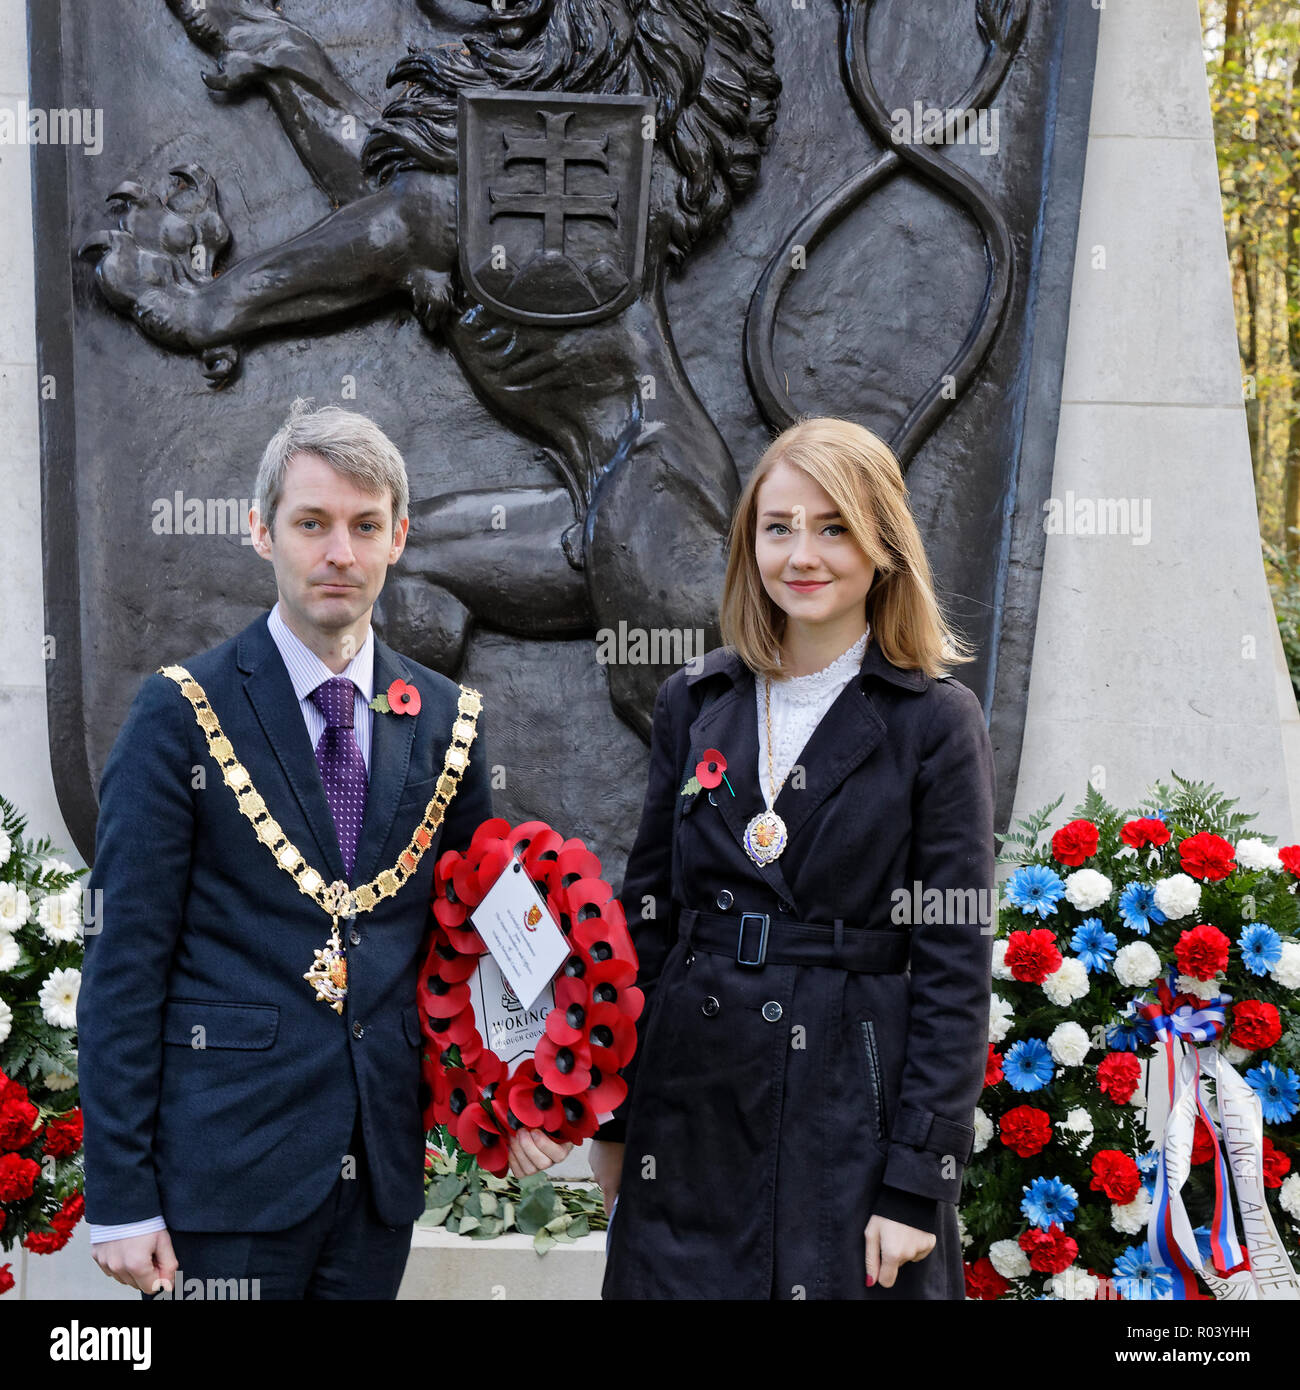 Will Forster & Hannah Thompson, Mayor & Mayoress of Woking, UK with ...